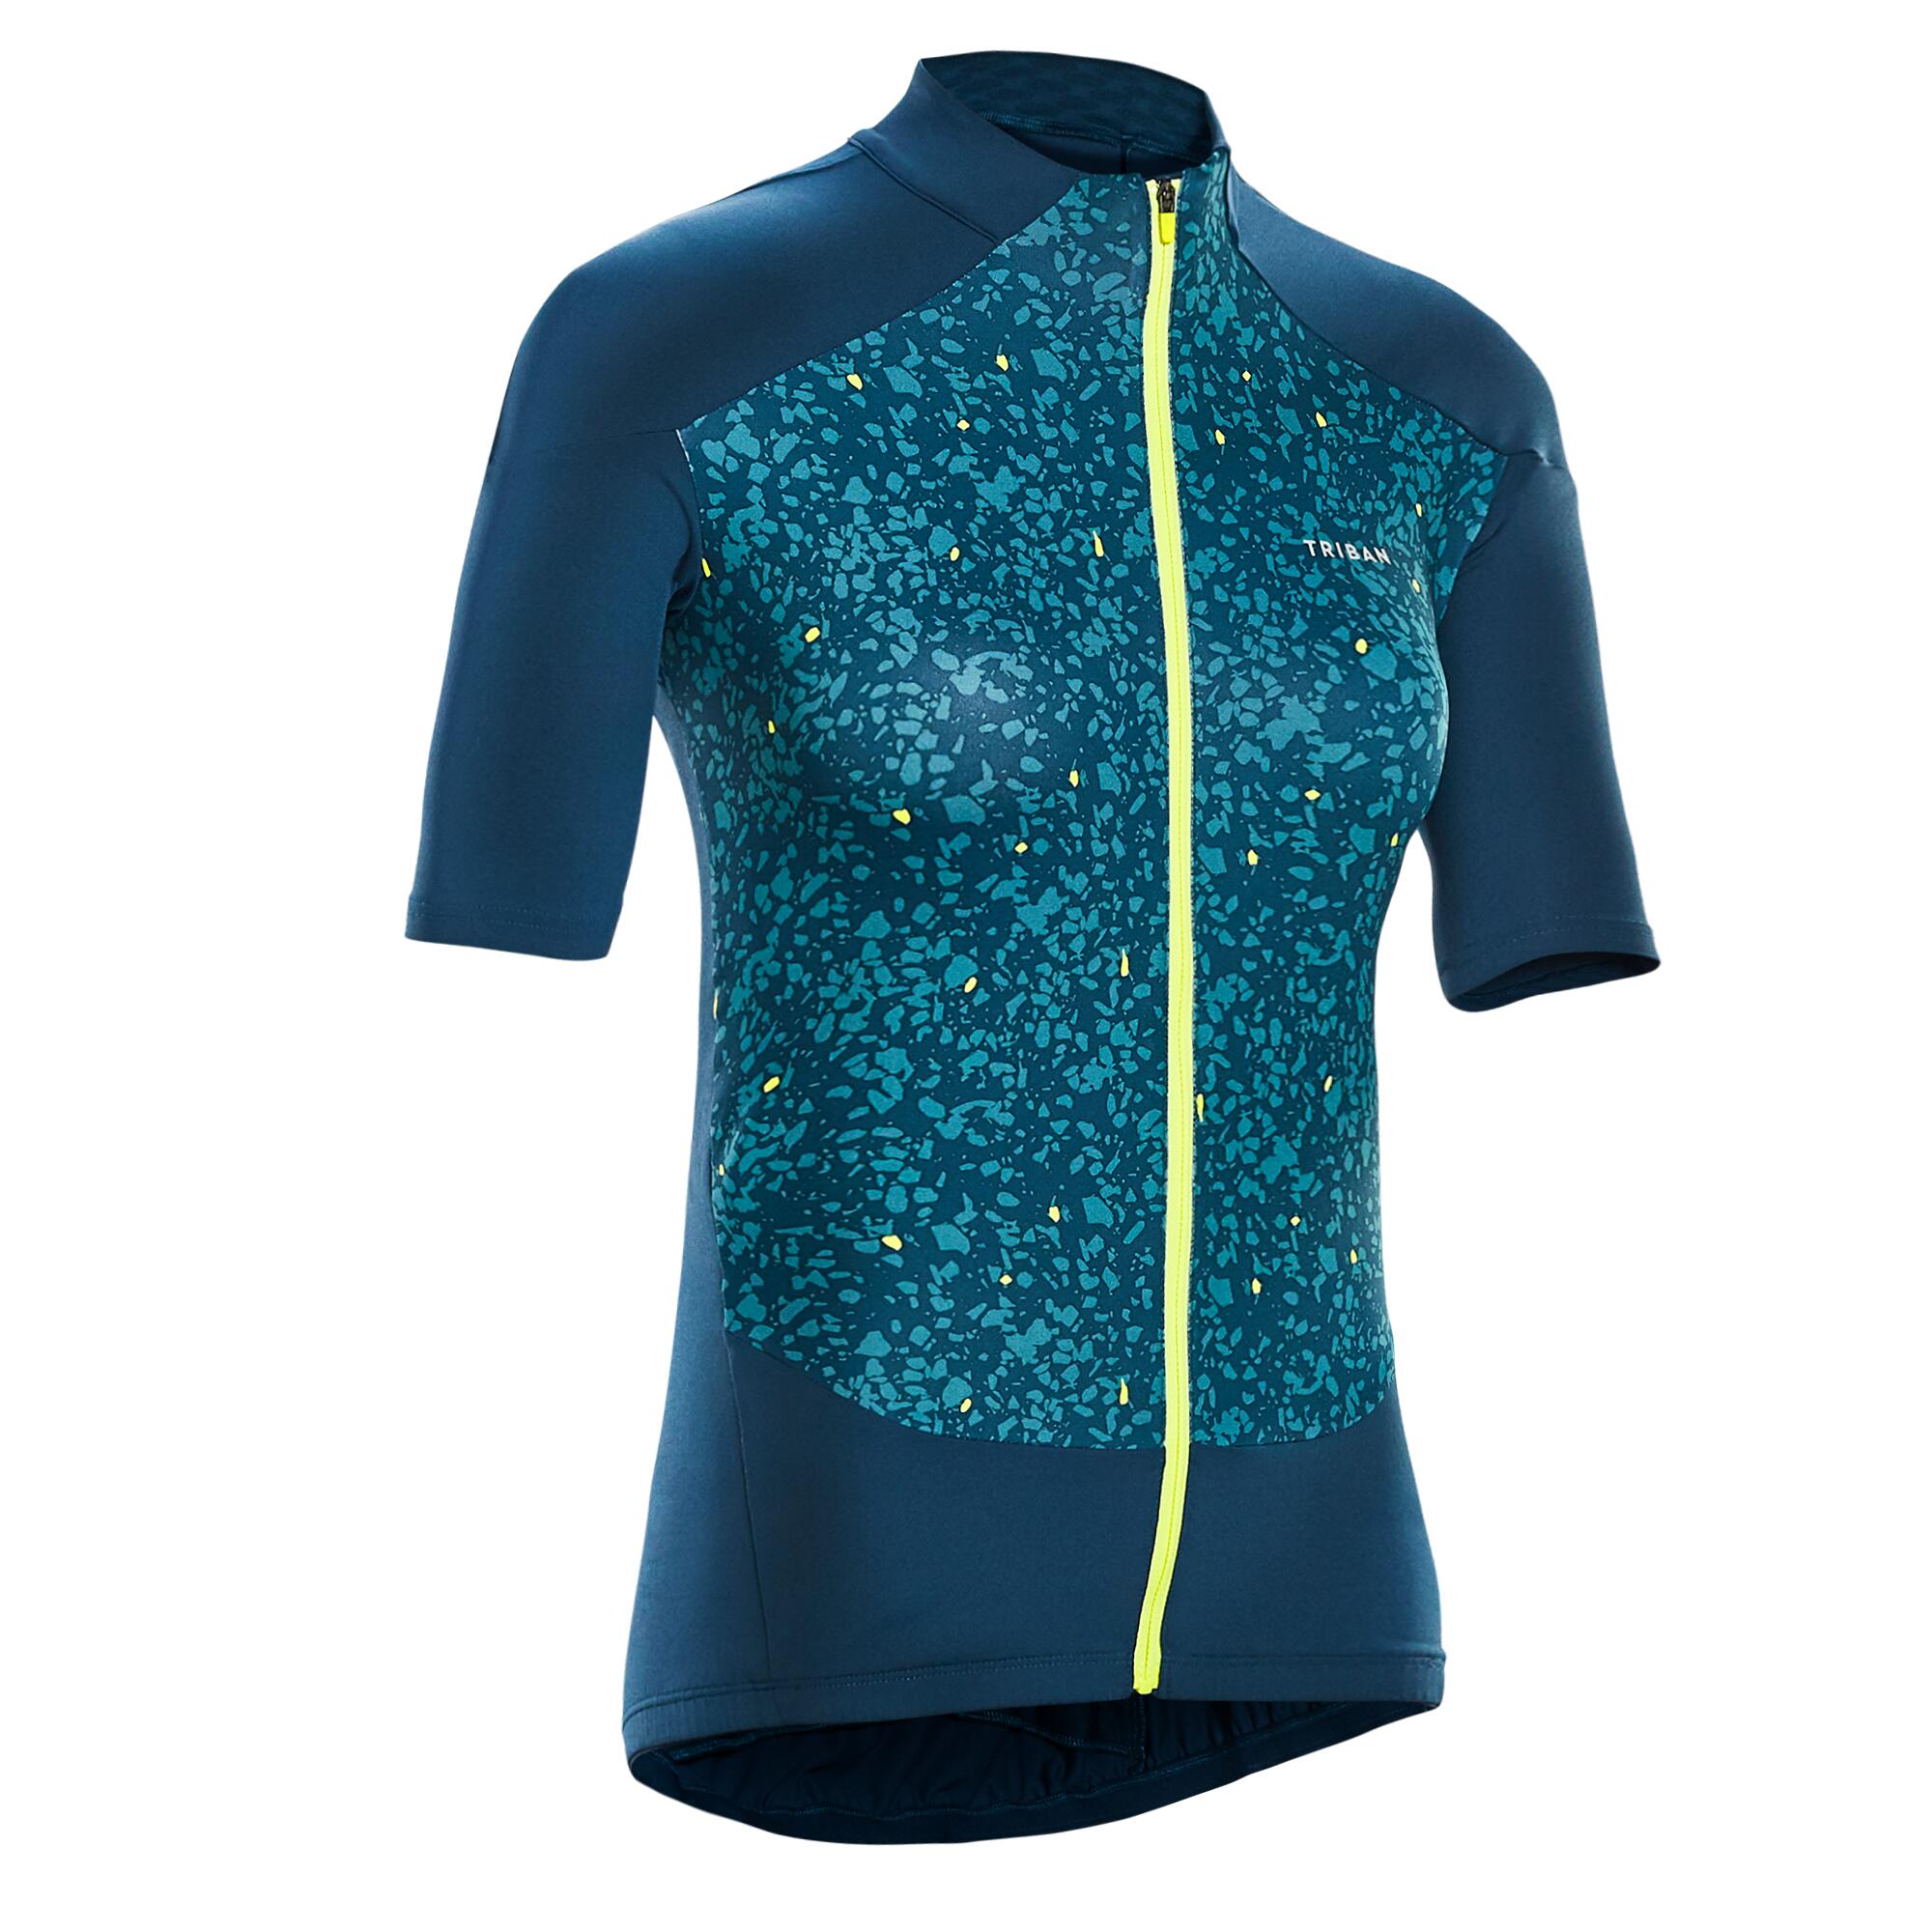 VAN RYSEL Women's Cycling Short-Sleeved Jersey 500 - Terrazzo Green